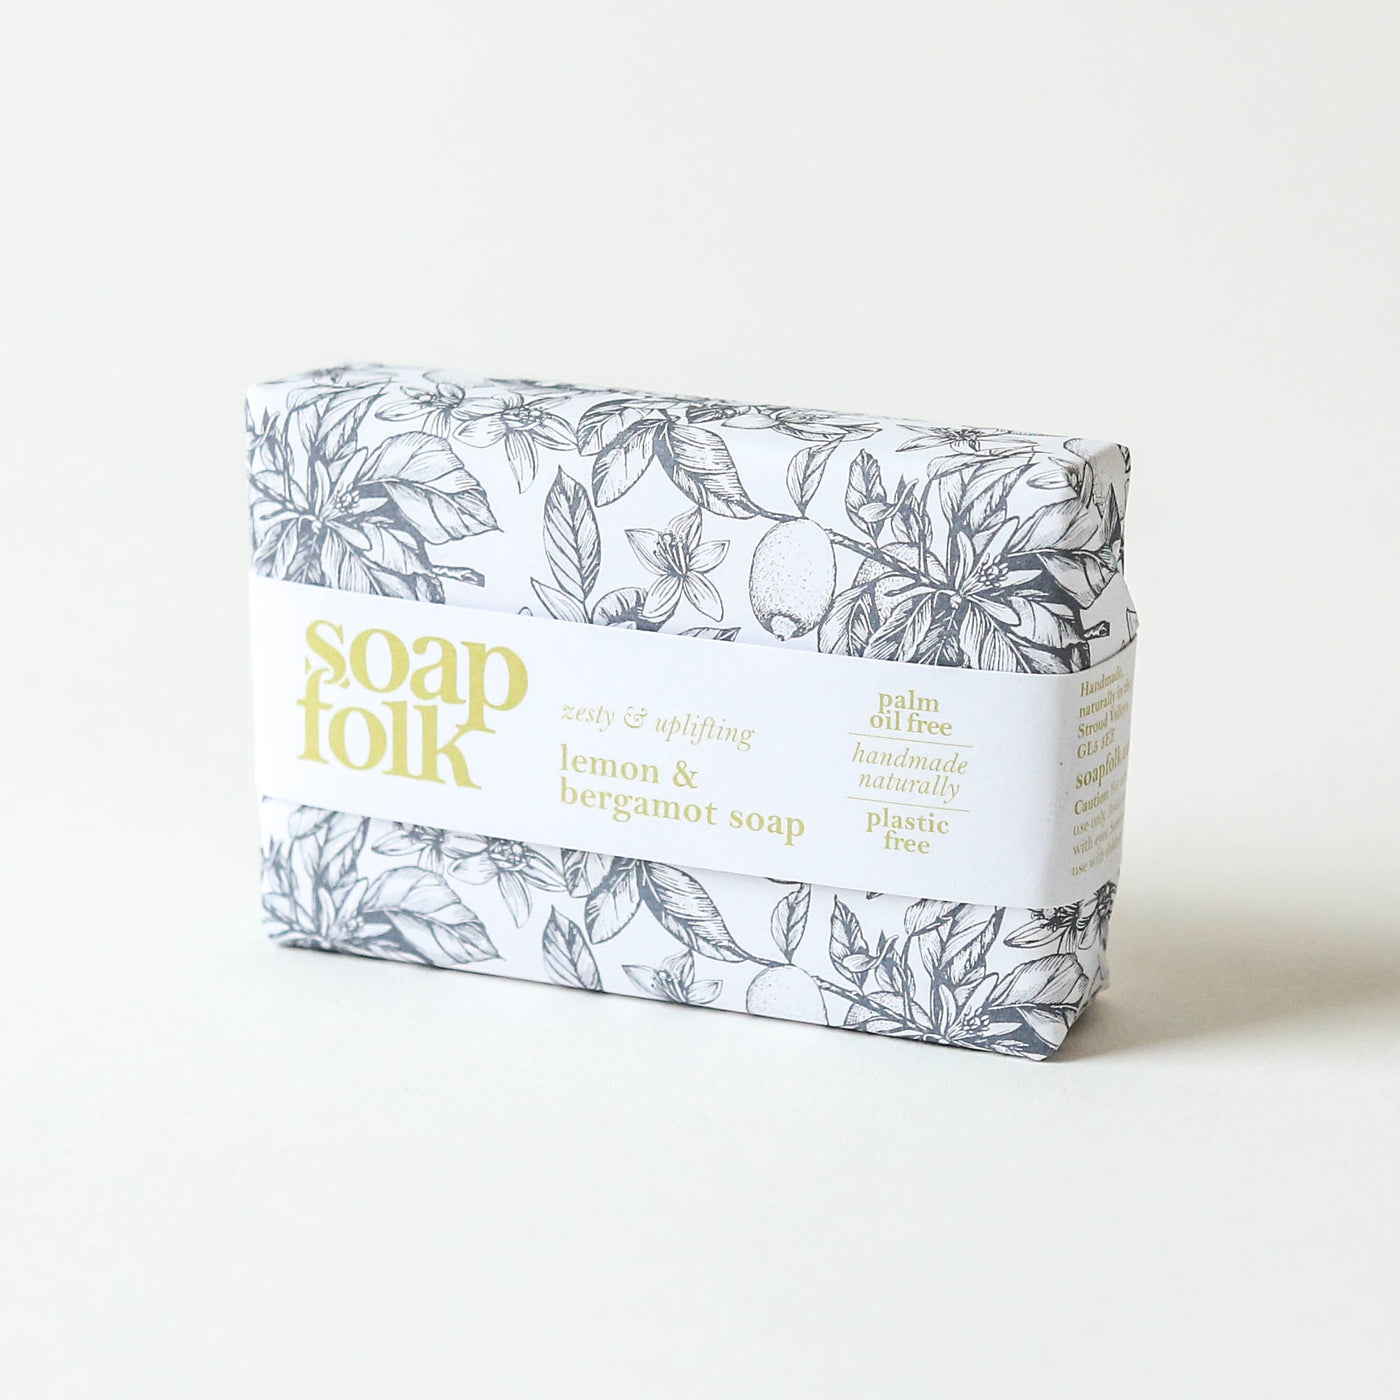 Cold Process Soap Bar by Soap Folk